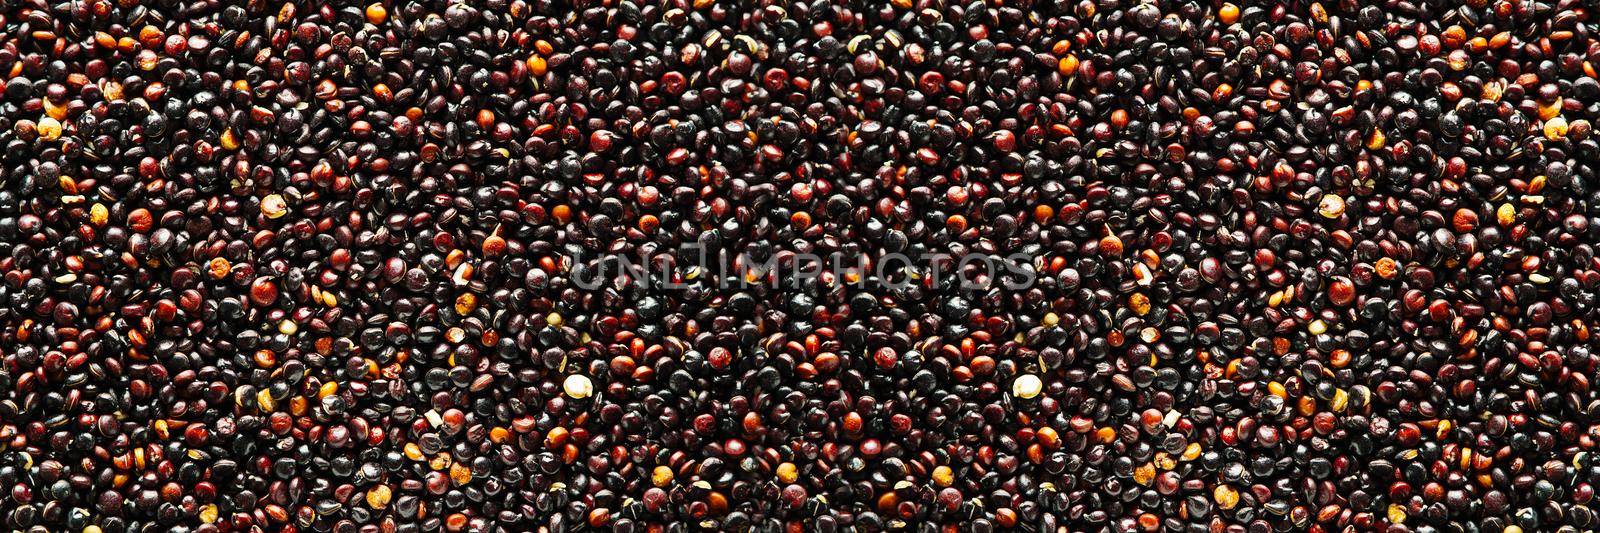 Chenopodium quinoa textured background of grains. Black Quinoa closeup of seed. by PhotoTime